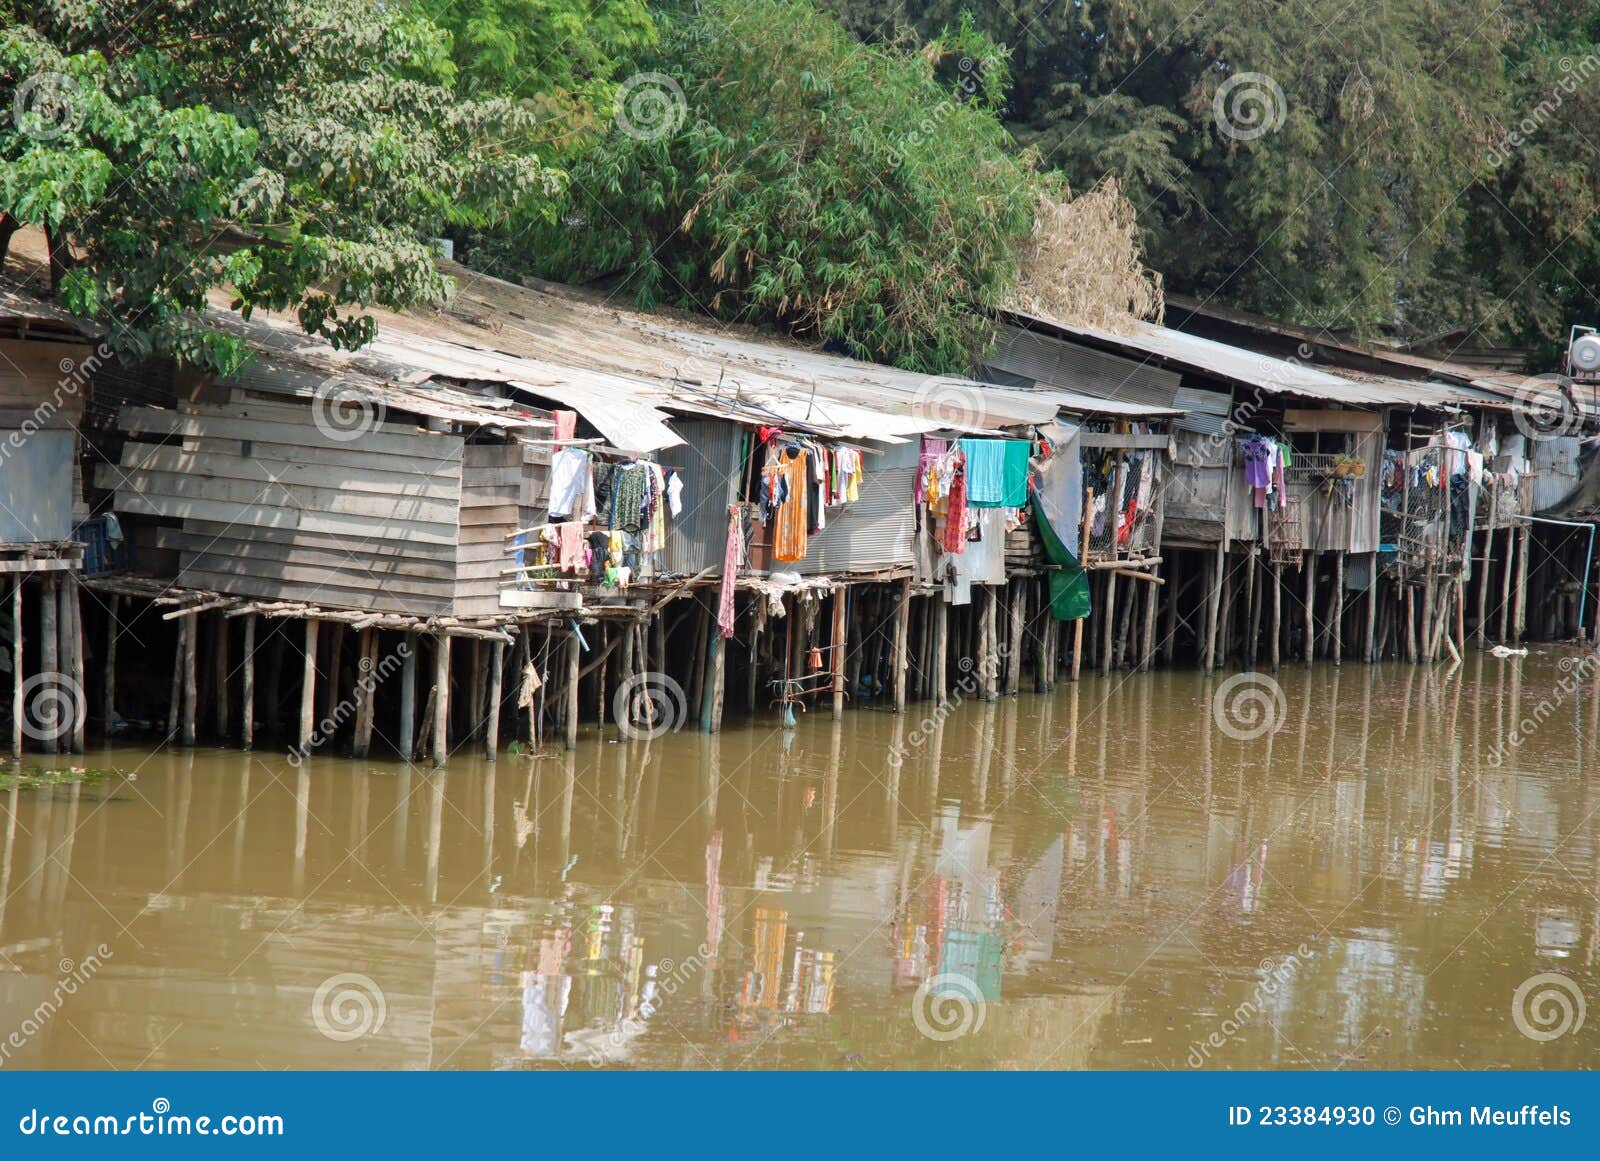 stilt houses - was mirror in water-cambodia